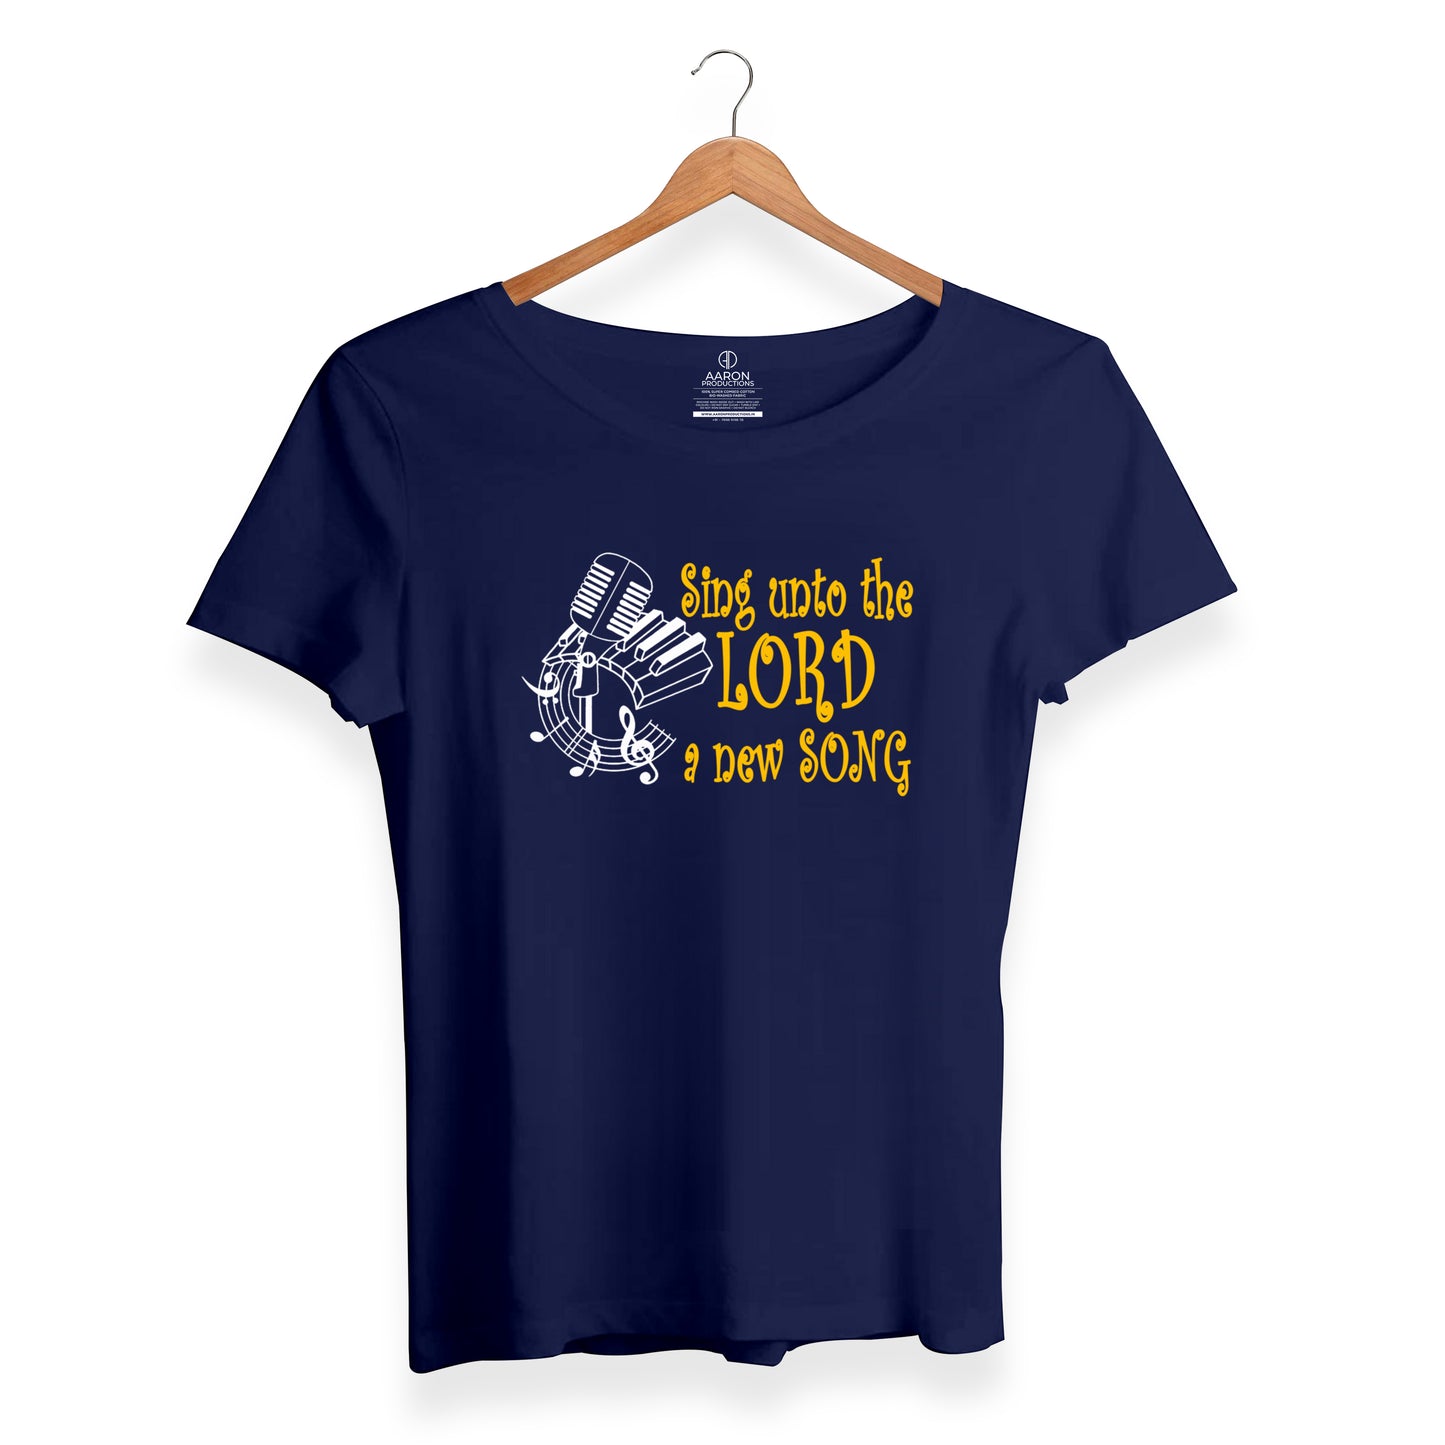 Sing unto the Lord - Women Tshirts